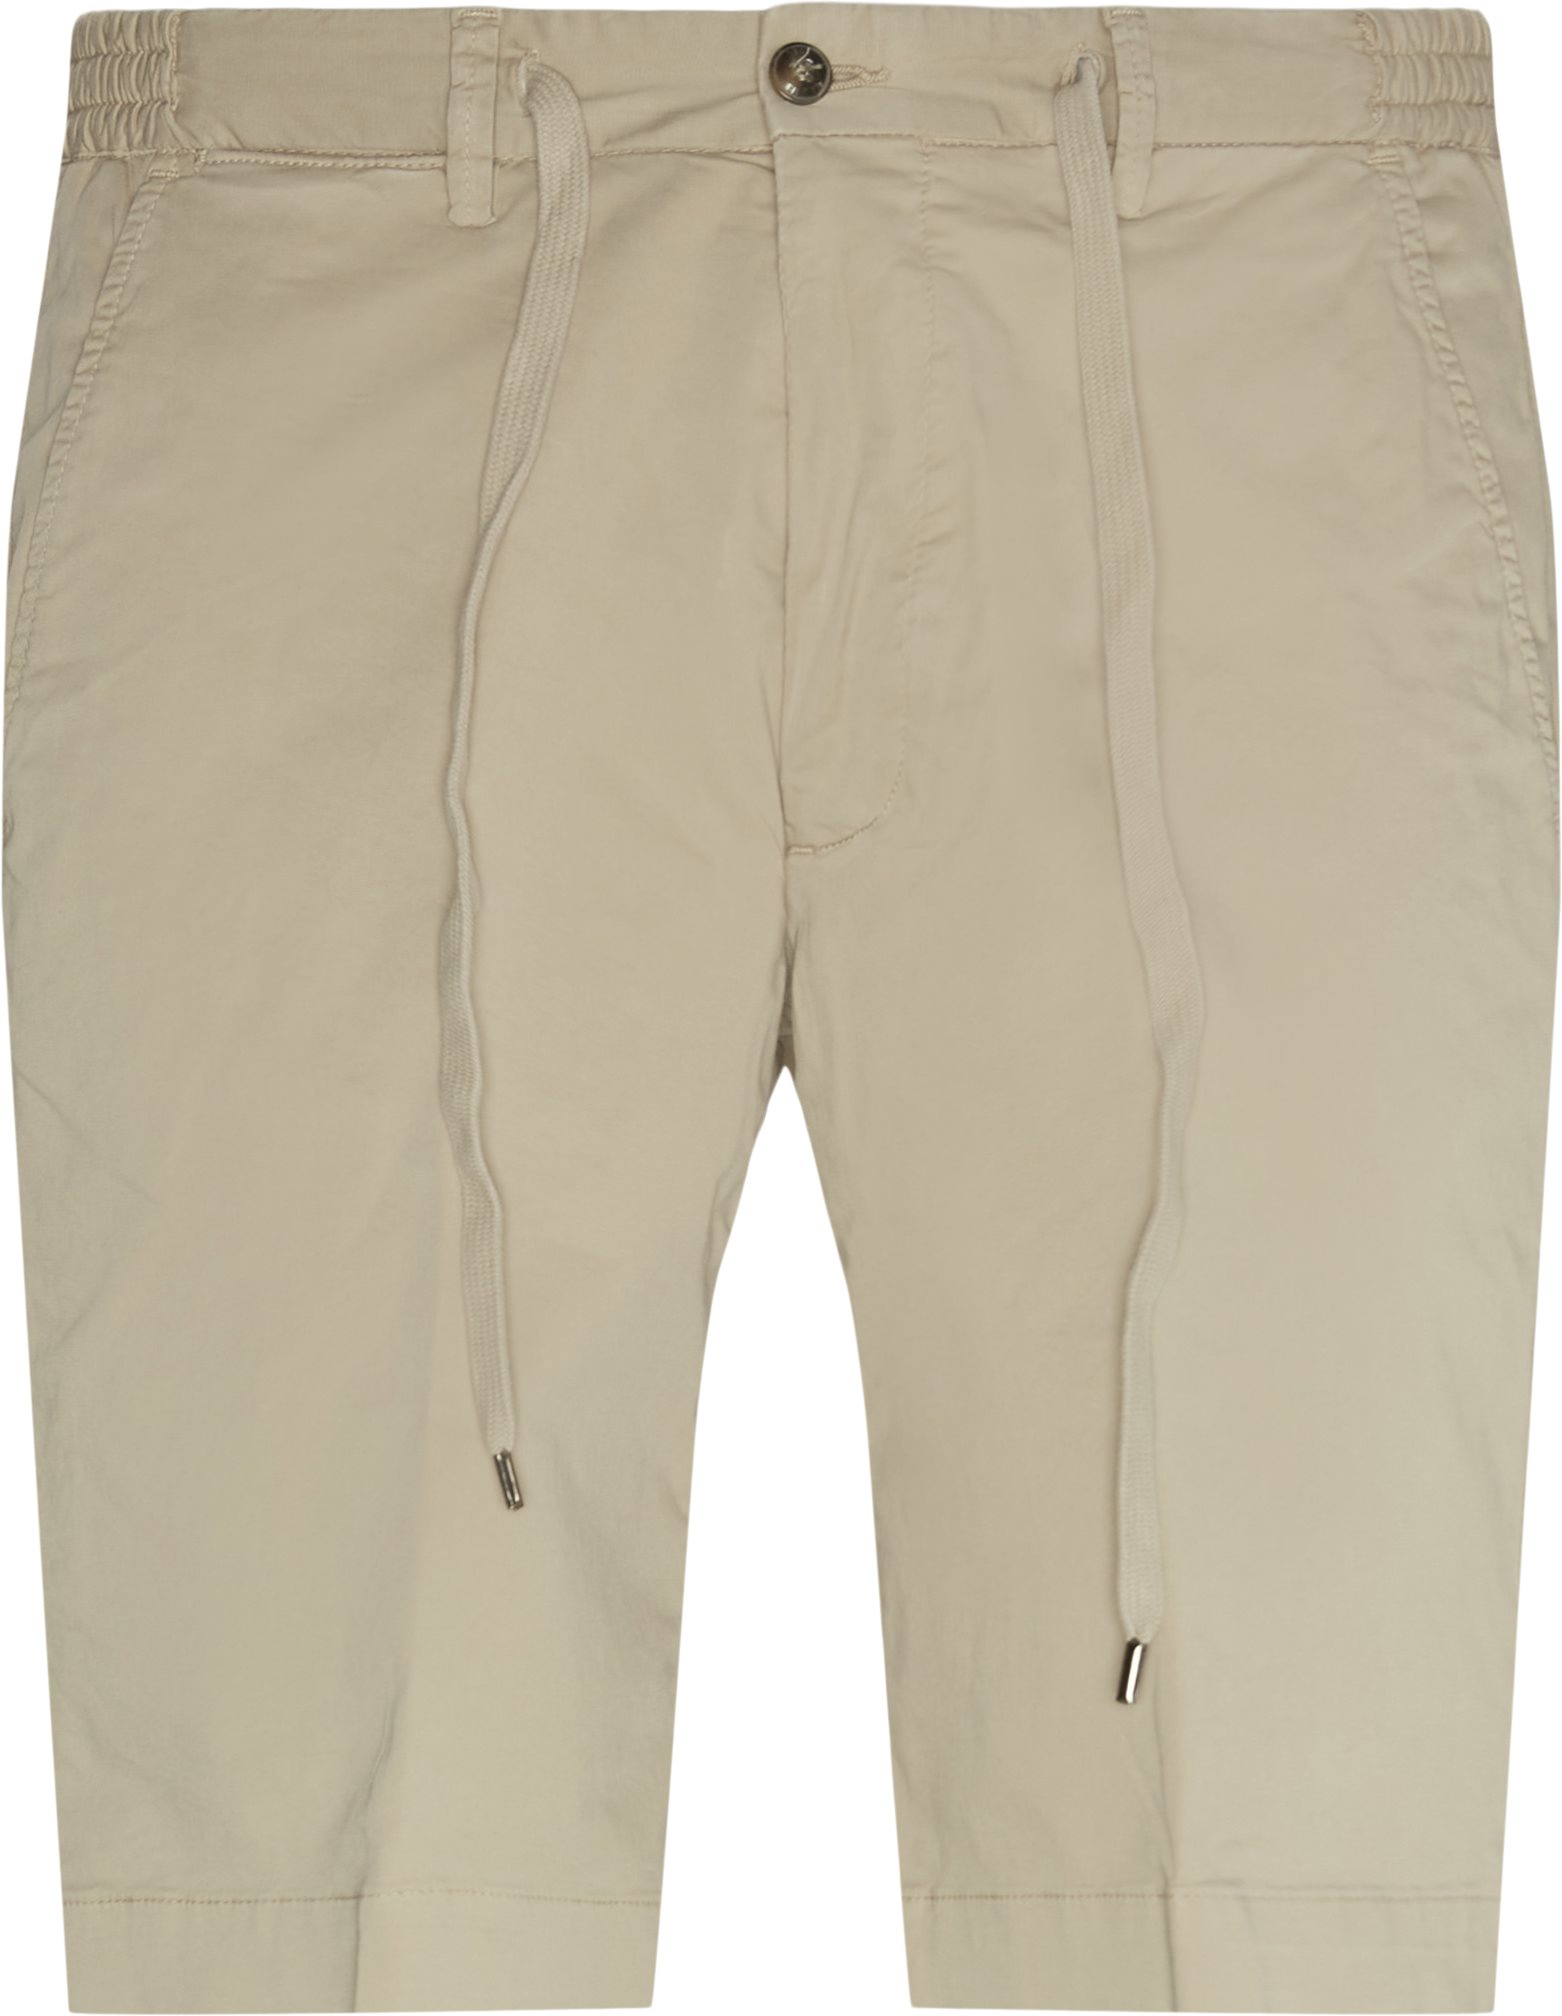 Malibu Shorts - Shorts - Regular fit - Sand